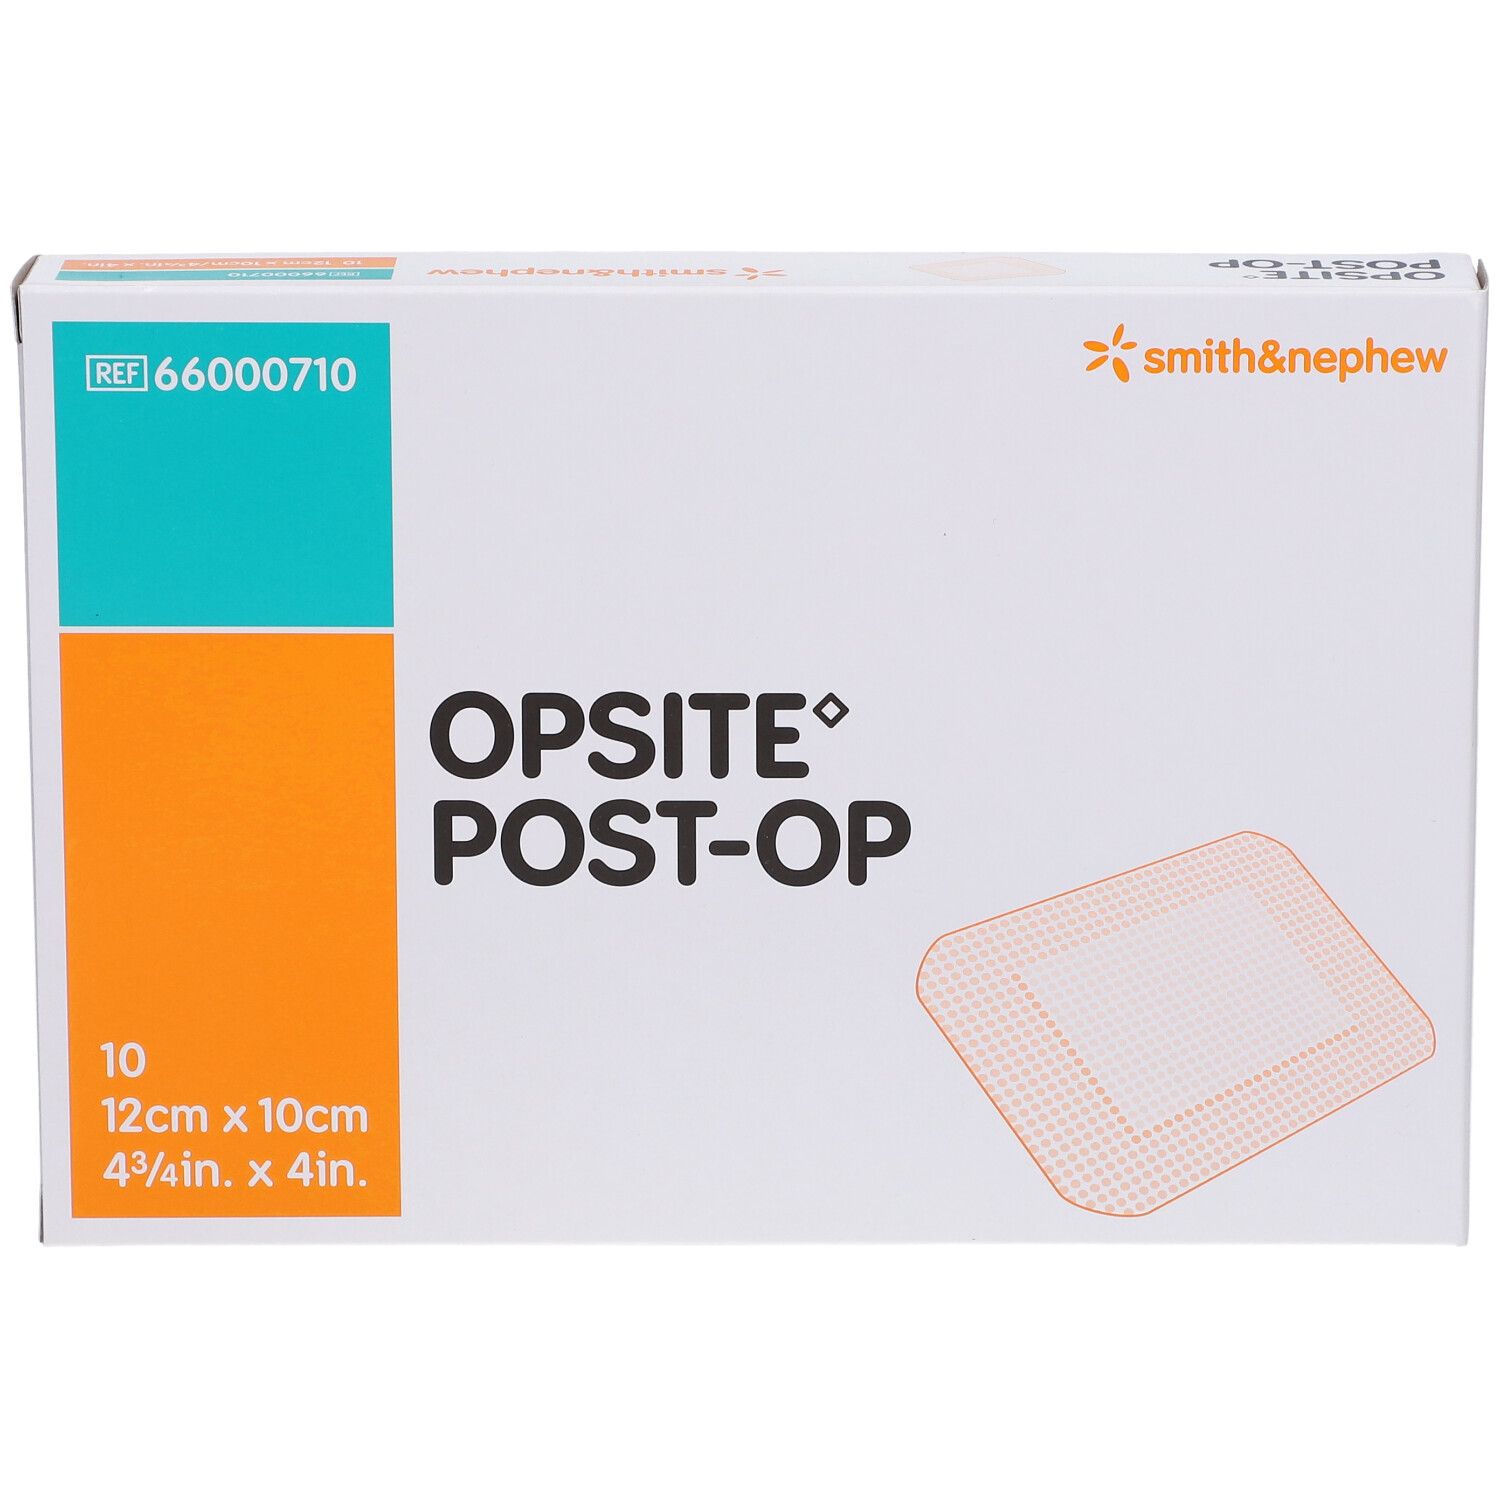 Smith & Nephew OpSite® Post-Op 12 x 10 cm